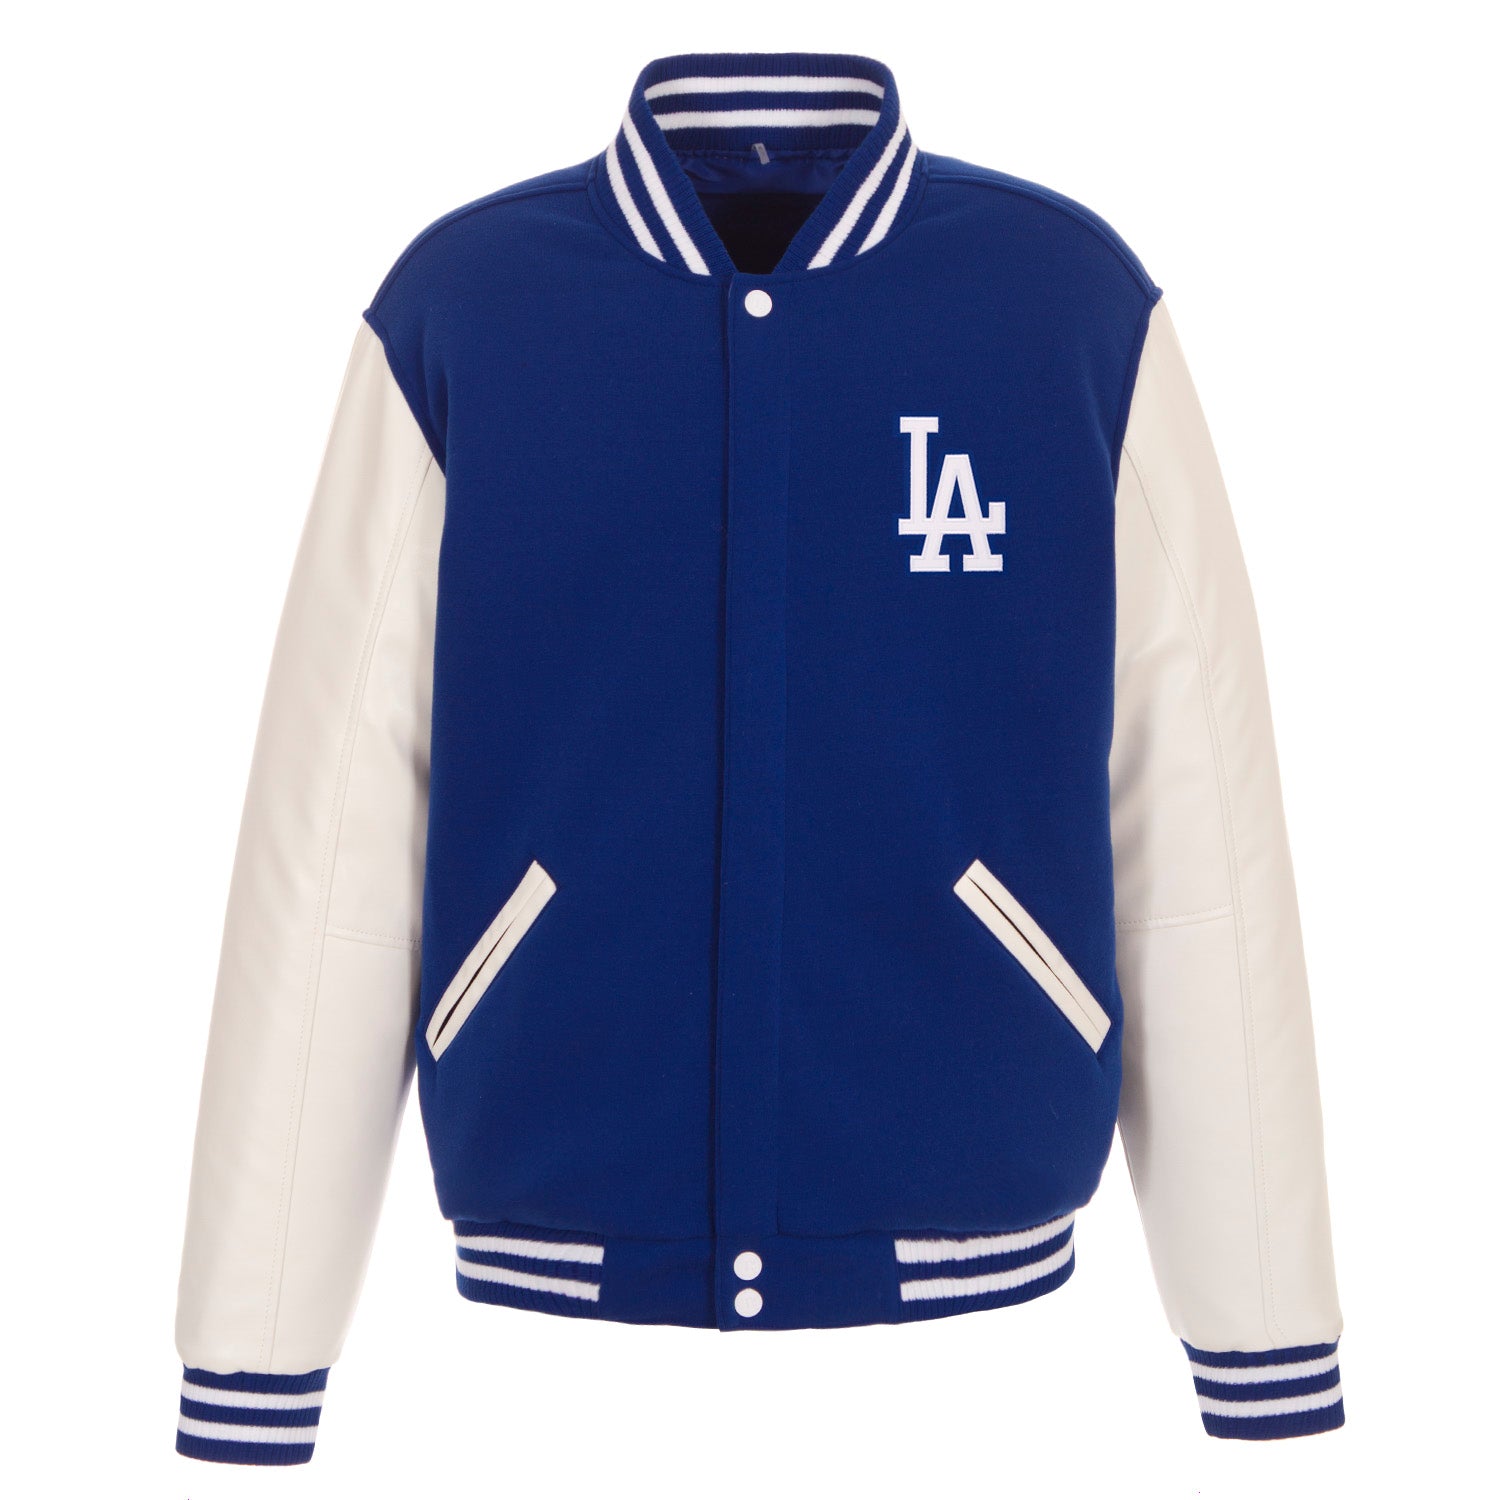 Los Angeles Dodgers Reversible Letterman's Jacket for Sale in Los